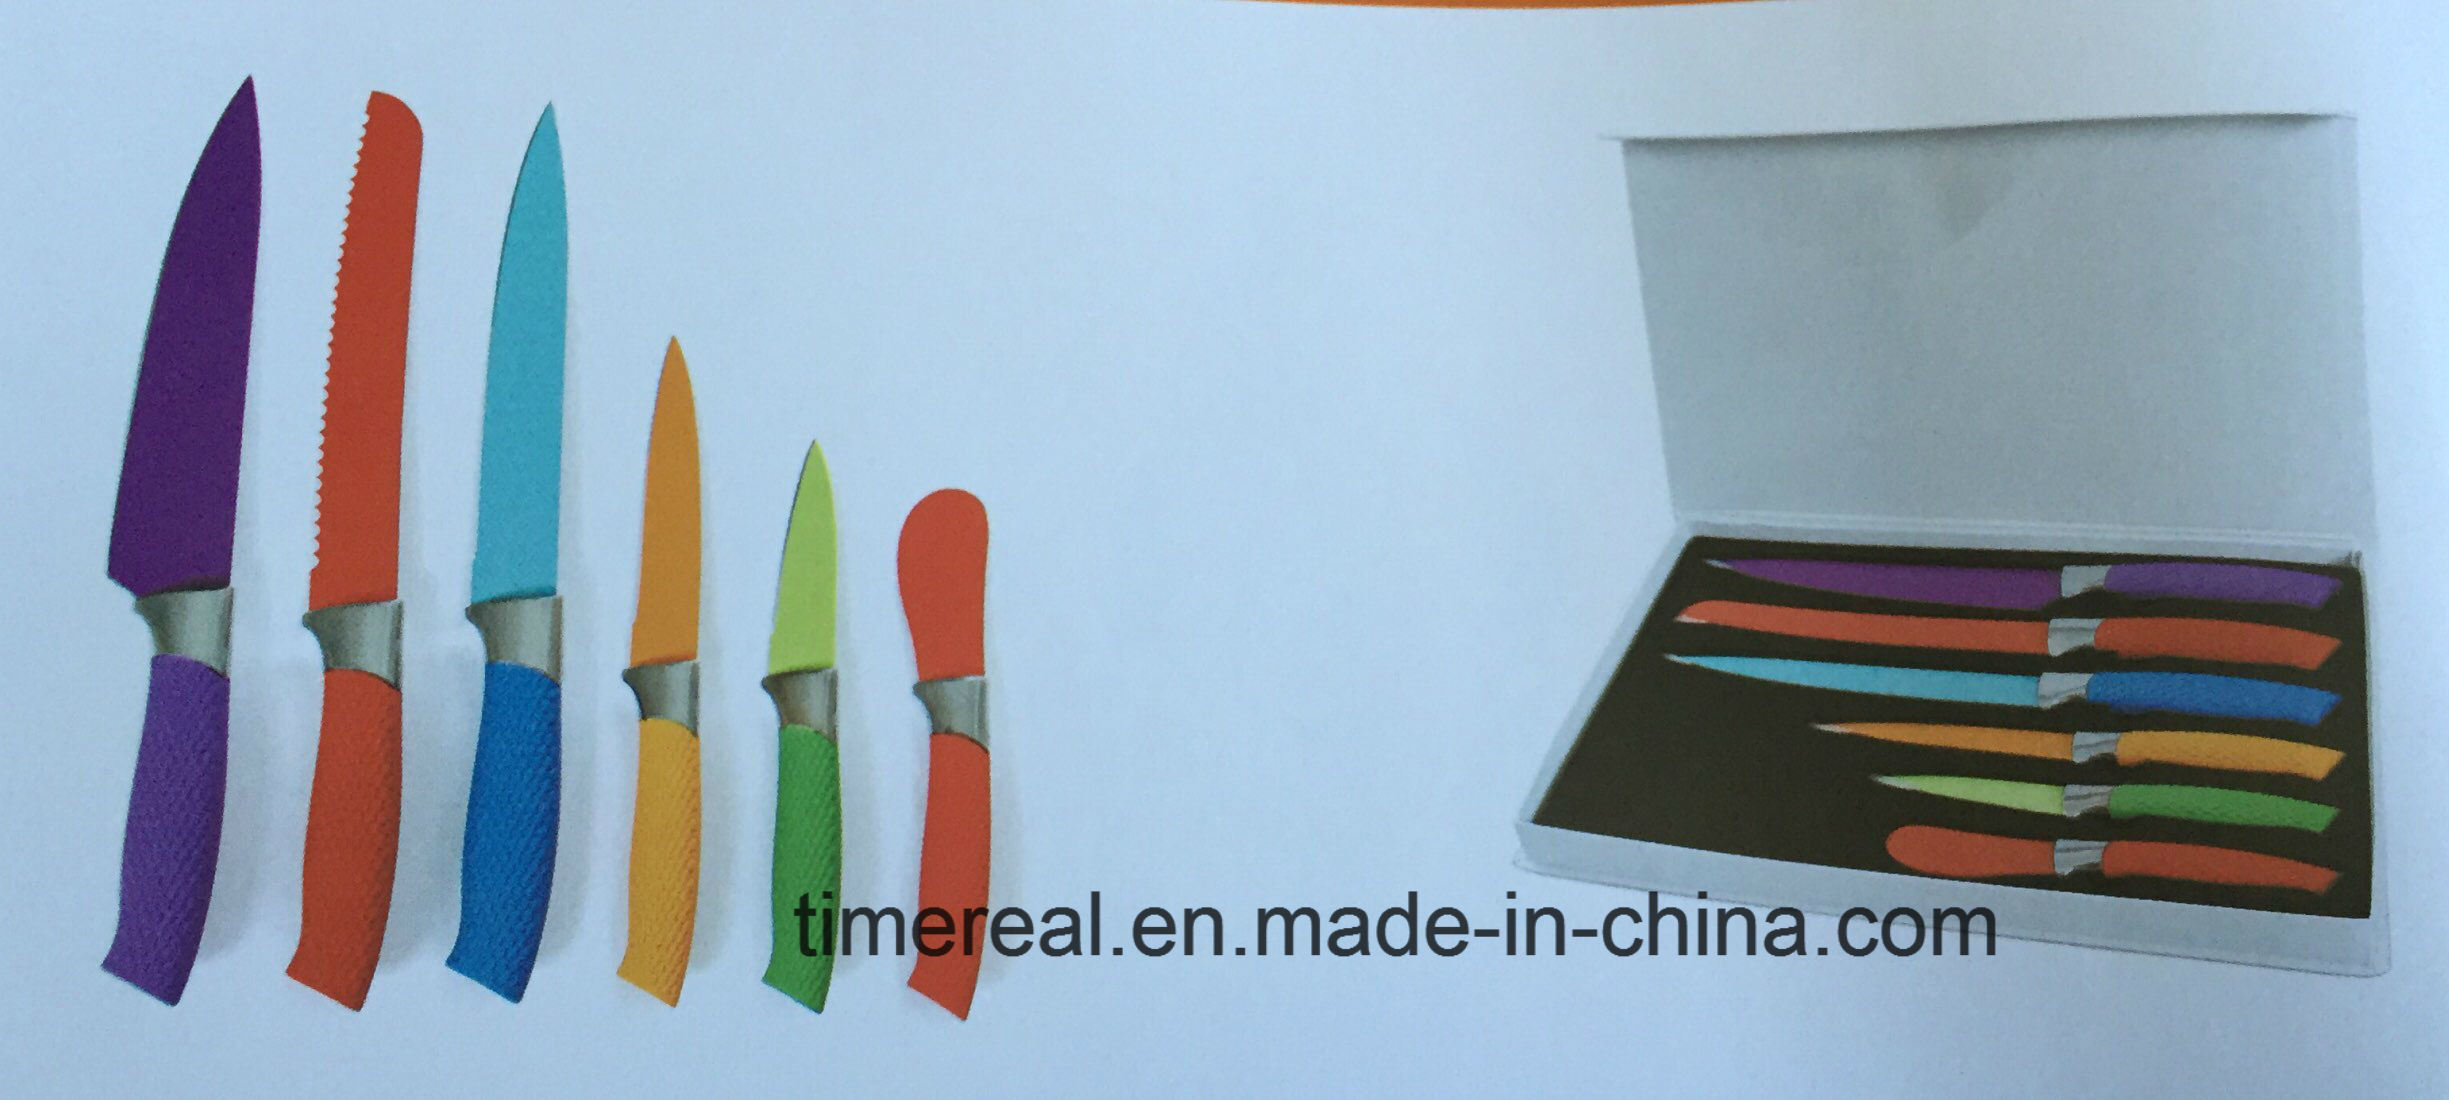 OEM/ODM Manufacturer Spoon Fork Knife Cutlery Set -
 Stainless Steel Kitchen Knives Set with Painting No. Fj-002 – Long Prosper